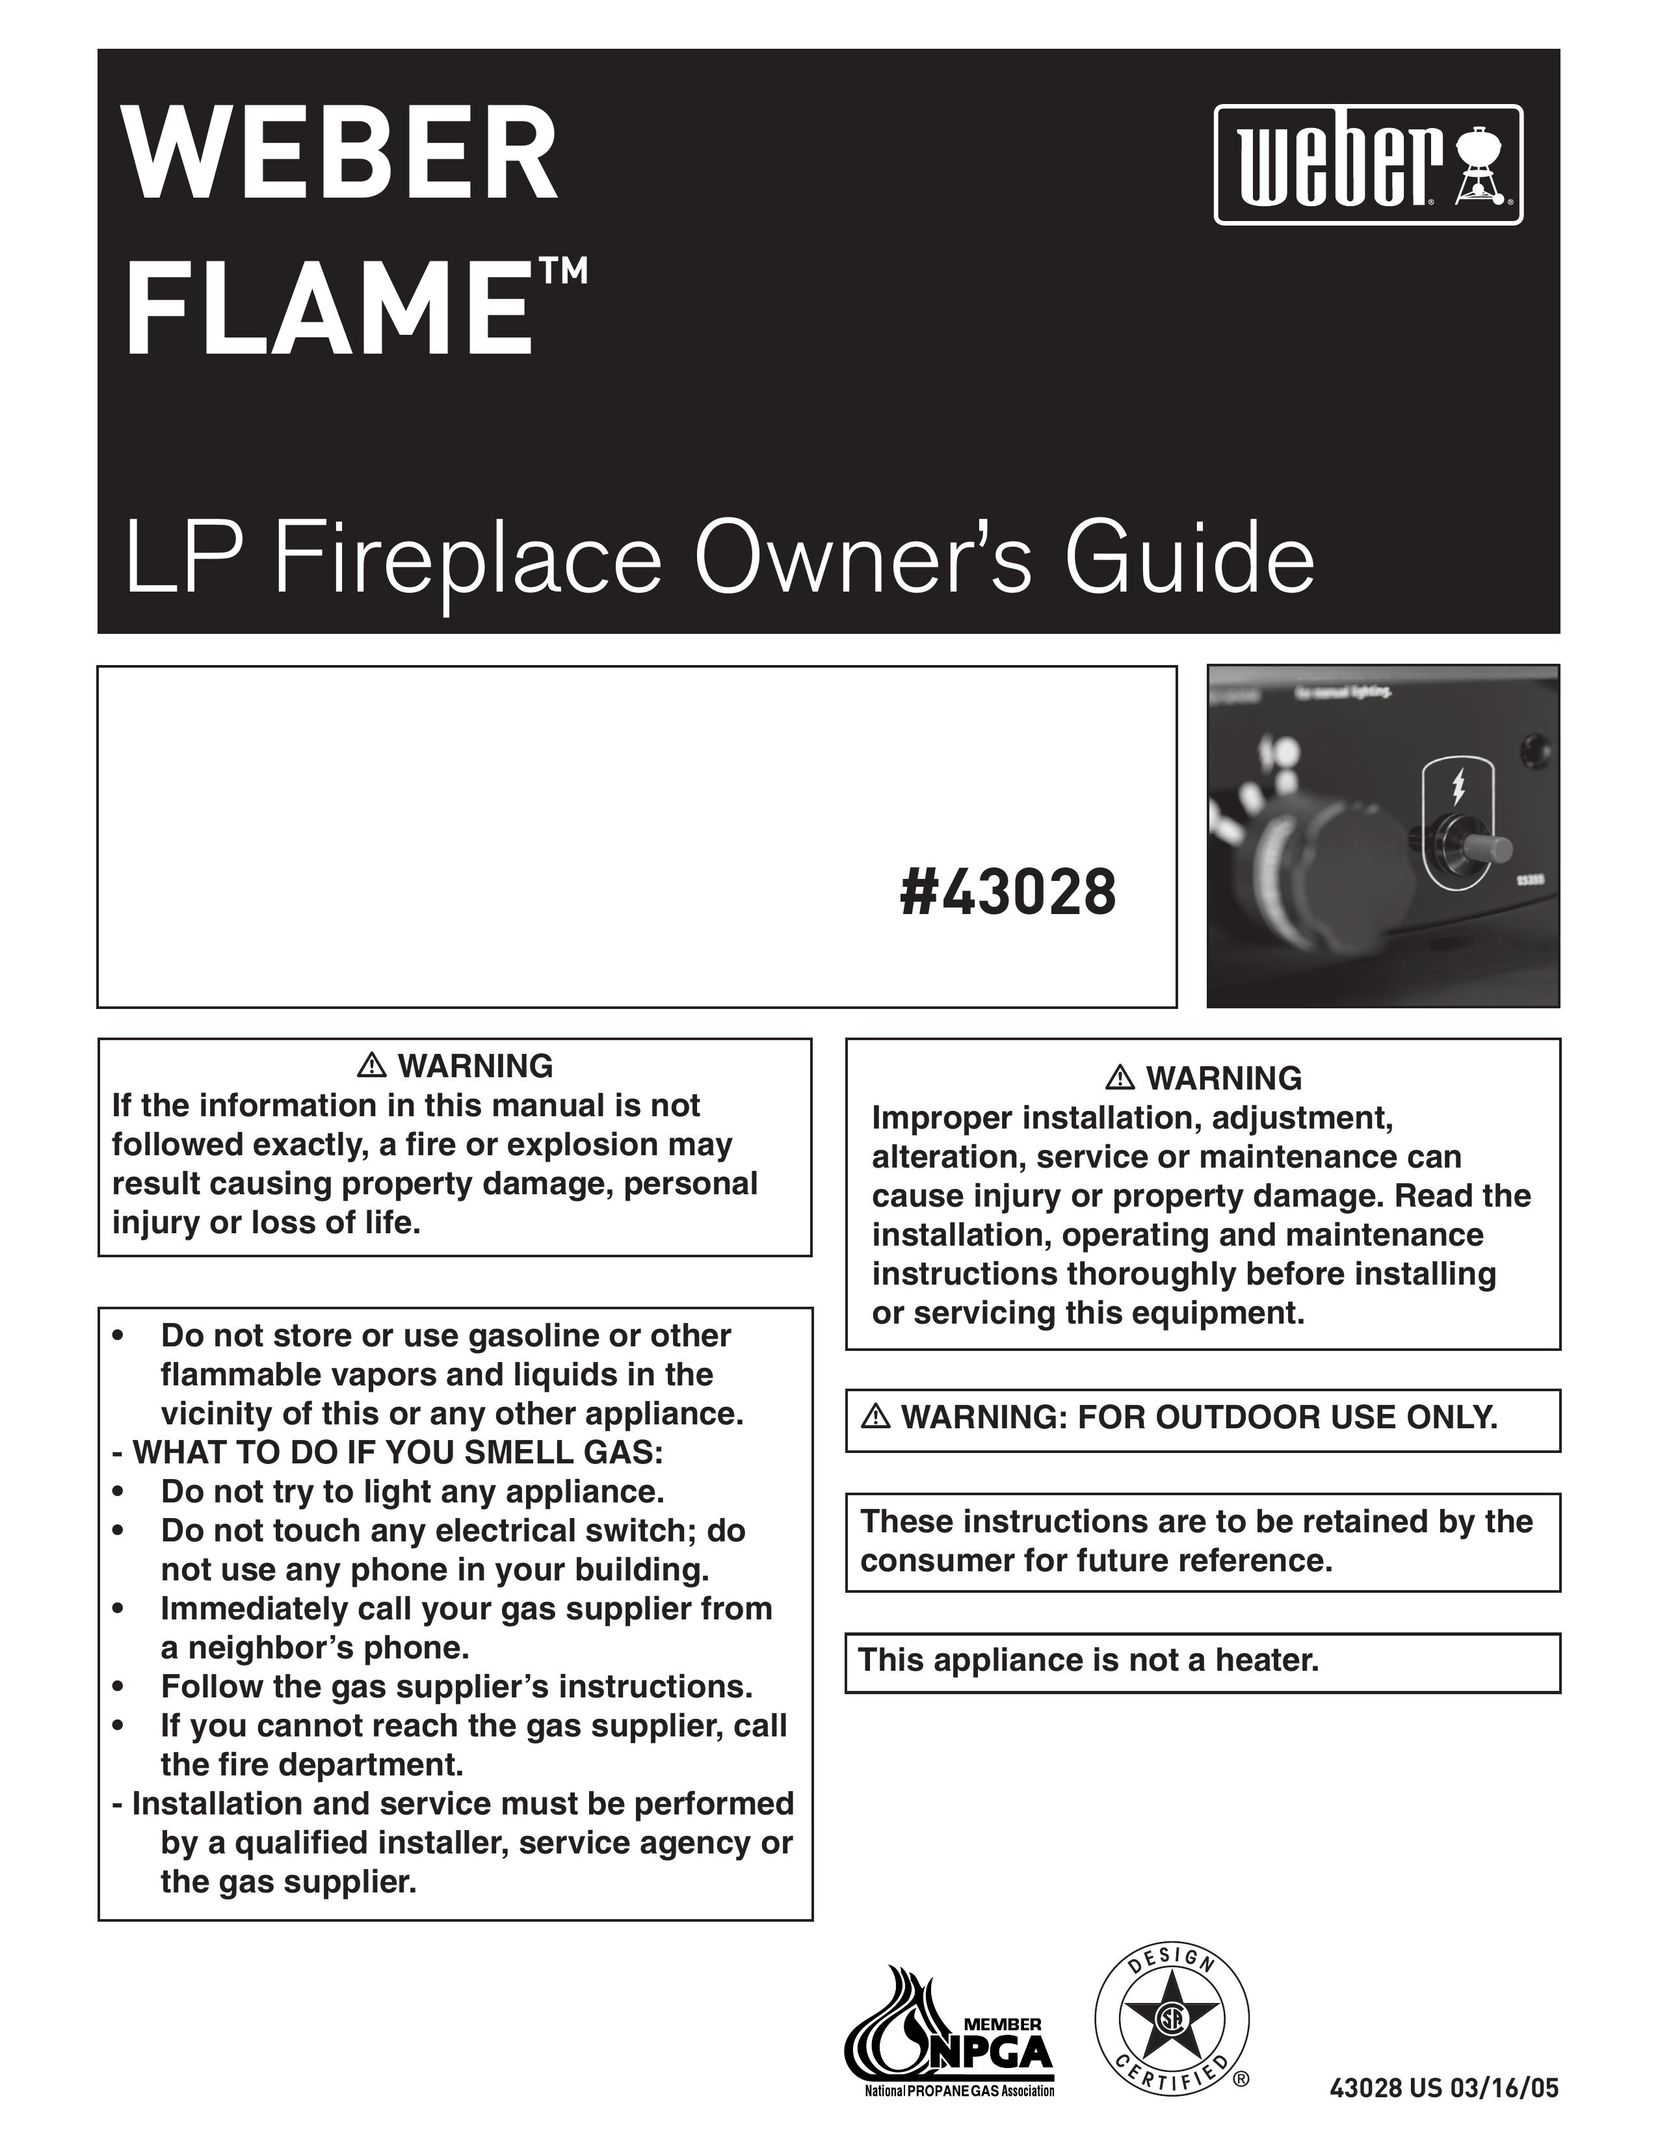 Weber #43028 Indoor Fireplace User Manual